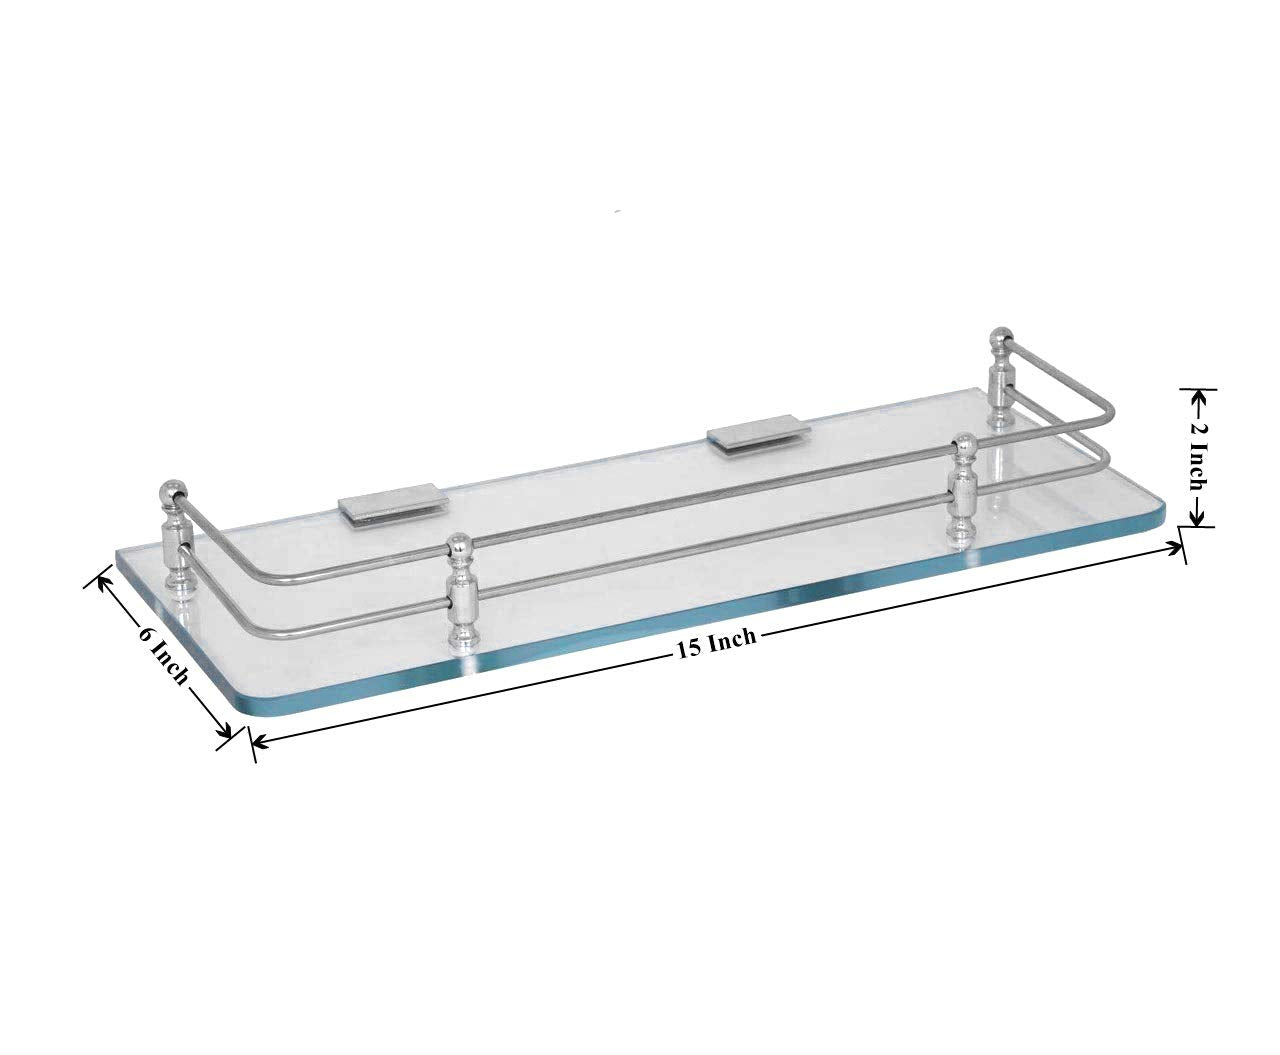 Plantex Premium Transparent Glass Shelf for Bathroom/Kitchen/Living Room - Bathroom Accessories (Polished 15x6 - Pack of 2)